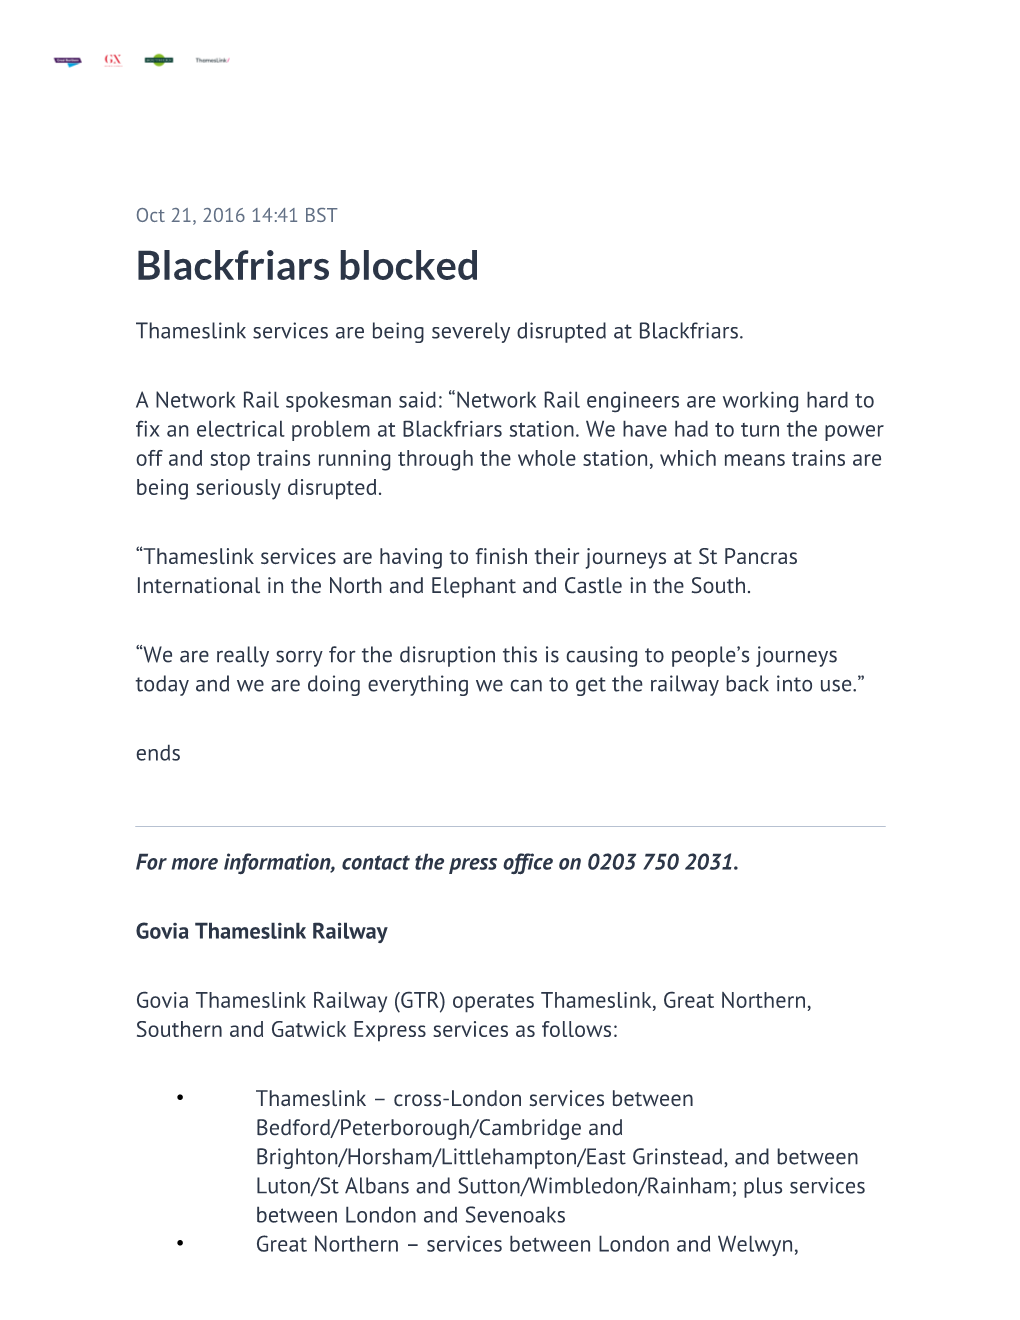 ​Blackfriars Blocked